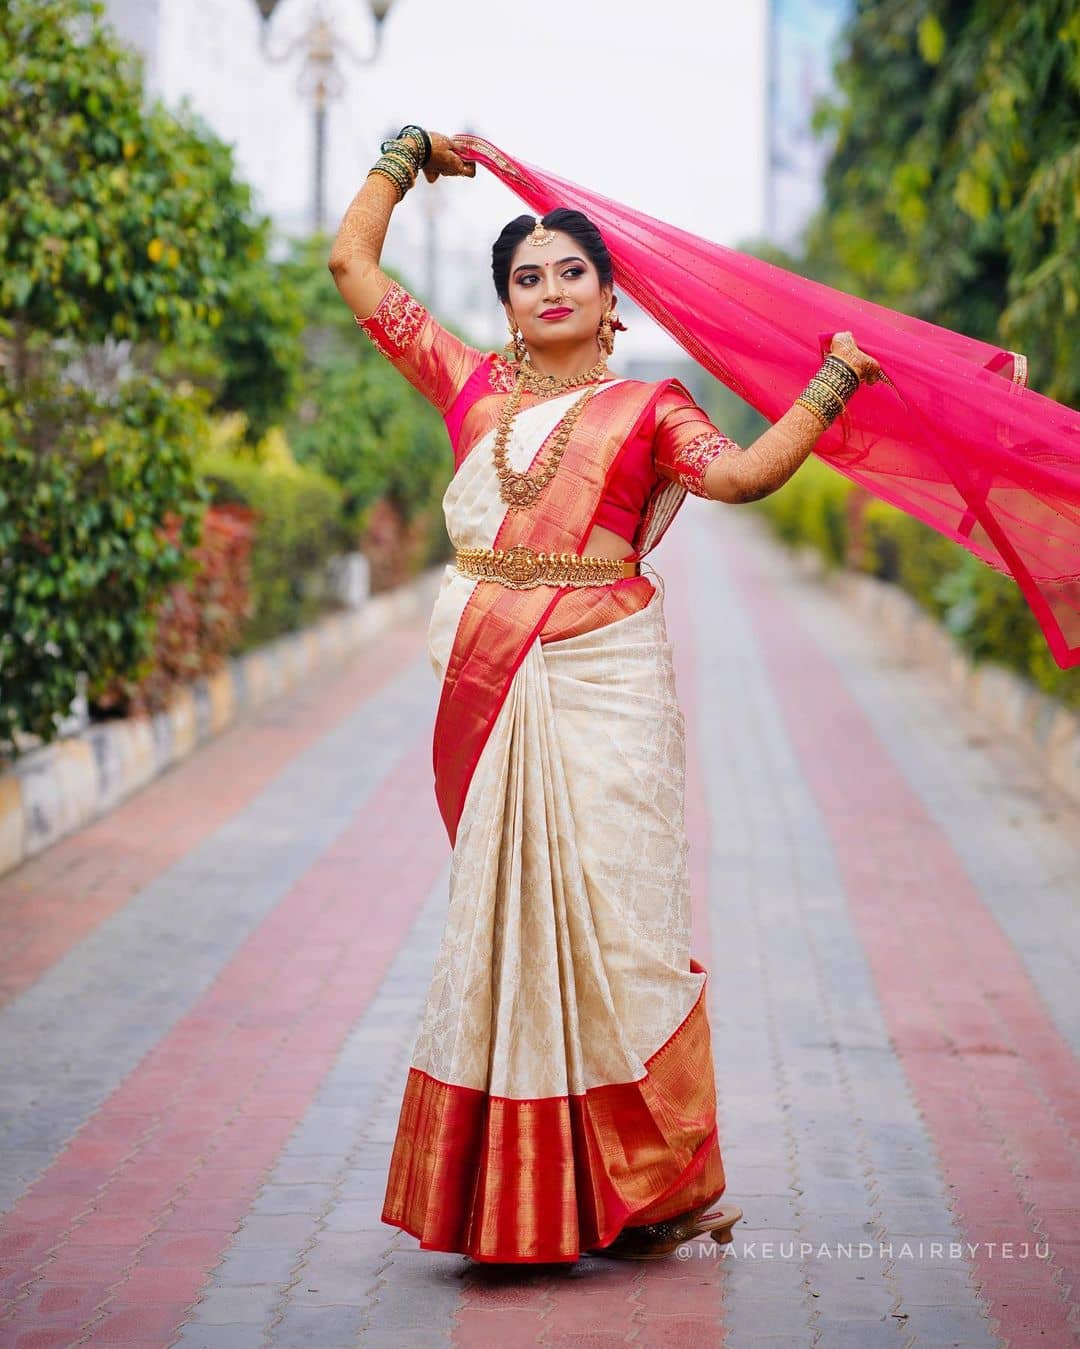 Looks very decent in saree - Makeup Tutorials and Tips | Facebook